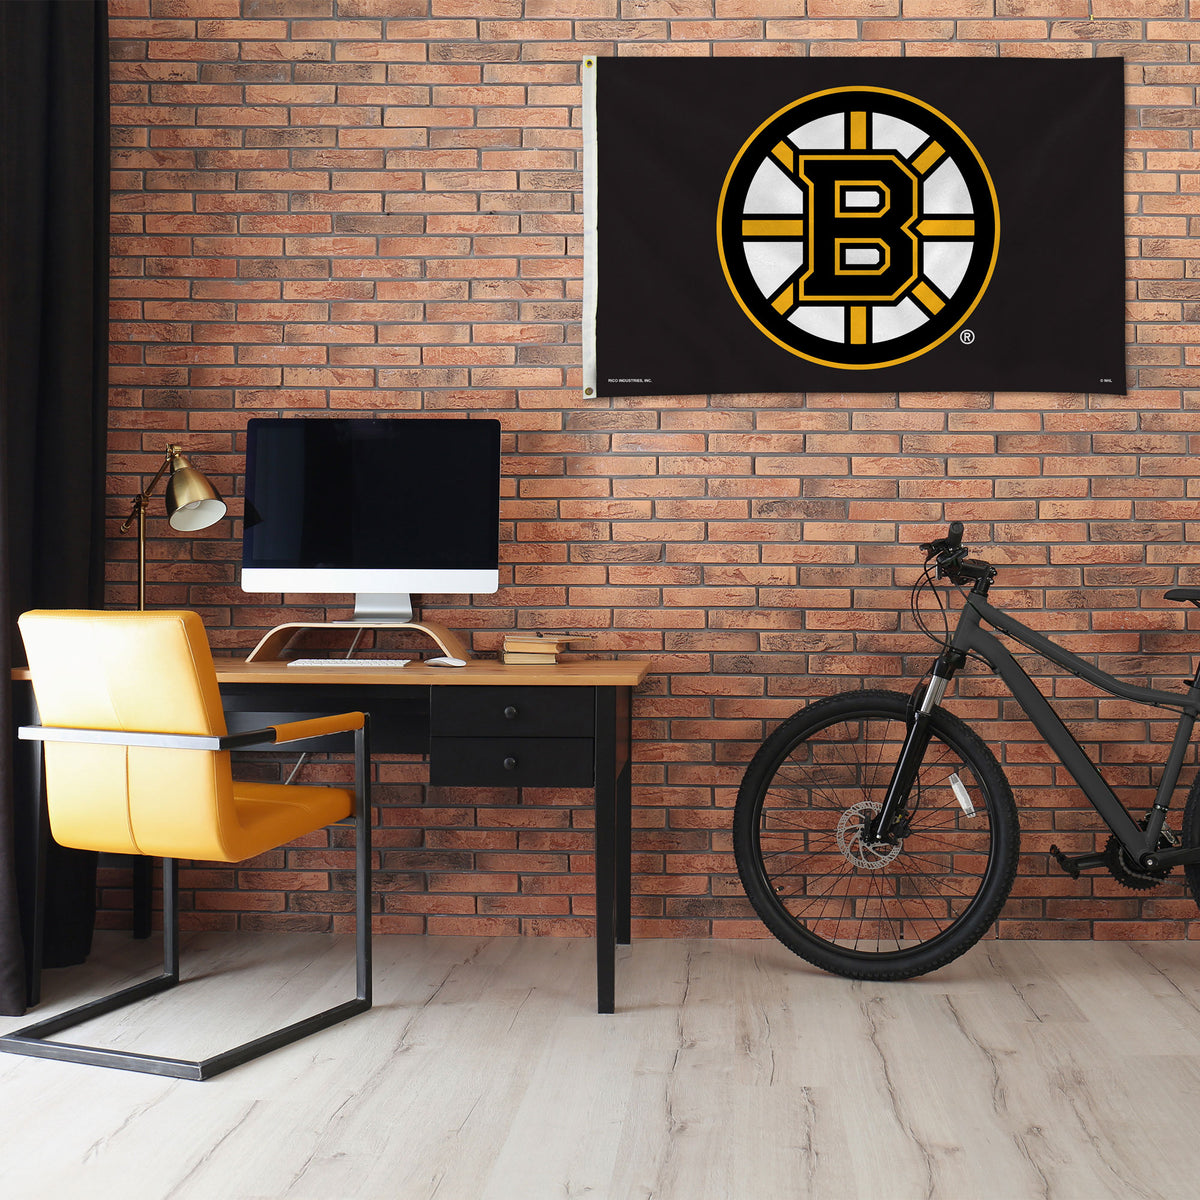 Boston Bruins Wood American Flag 